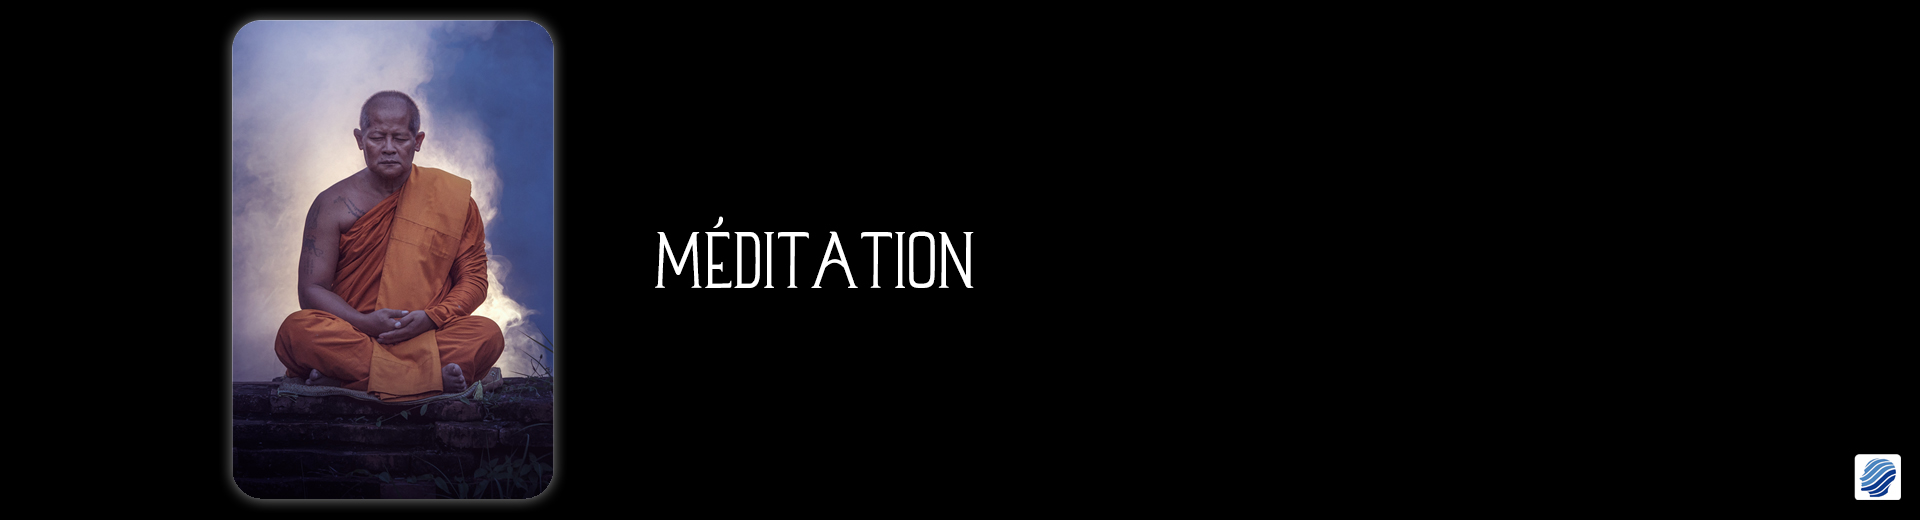 Méditation - Relaxation